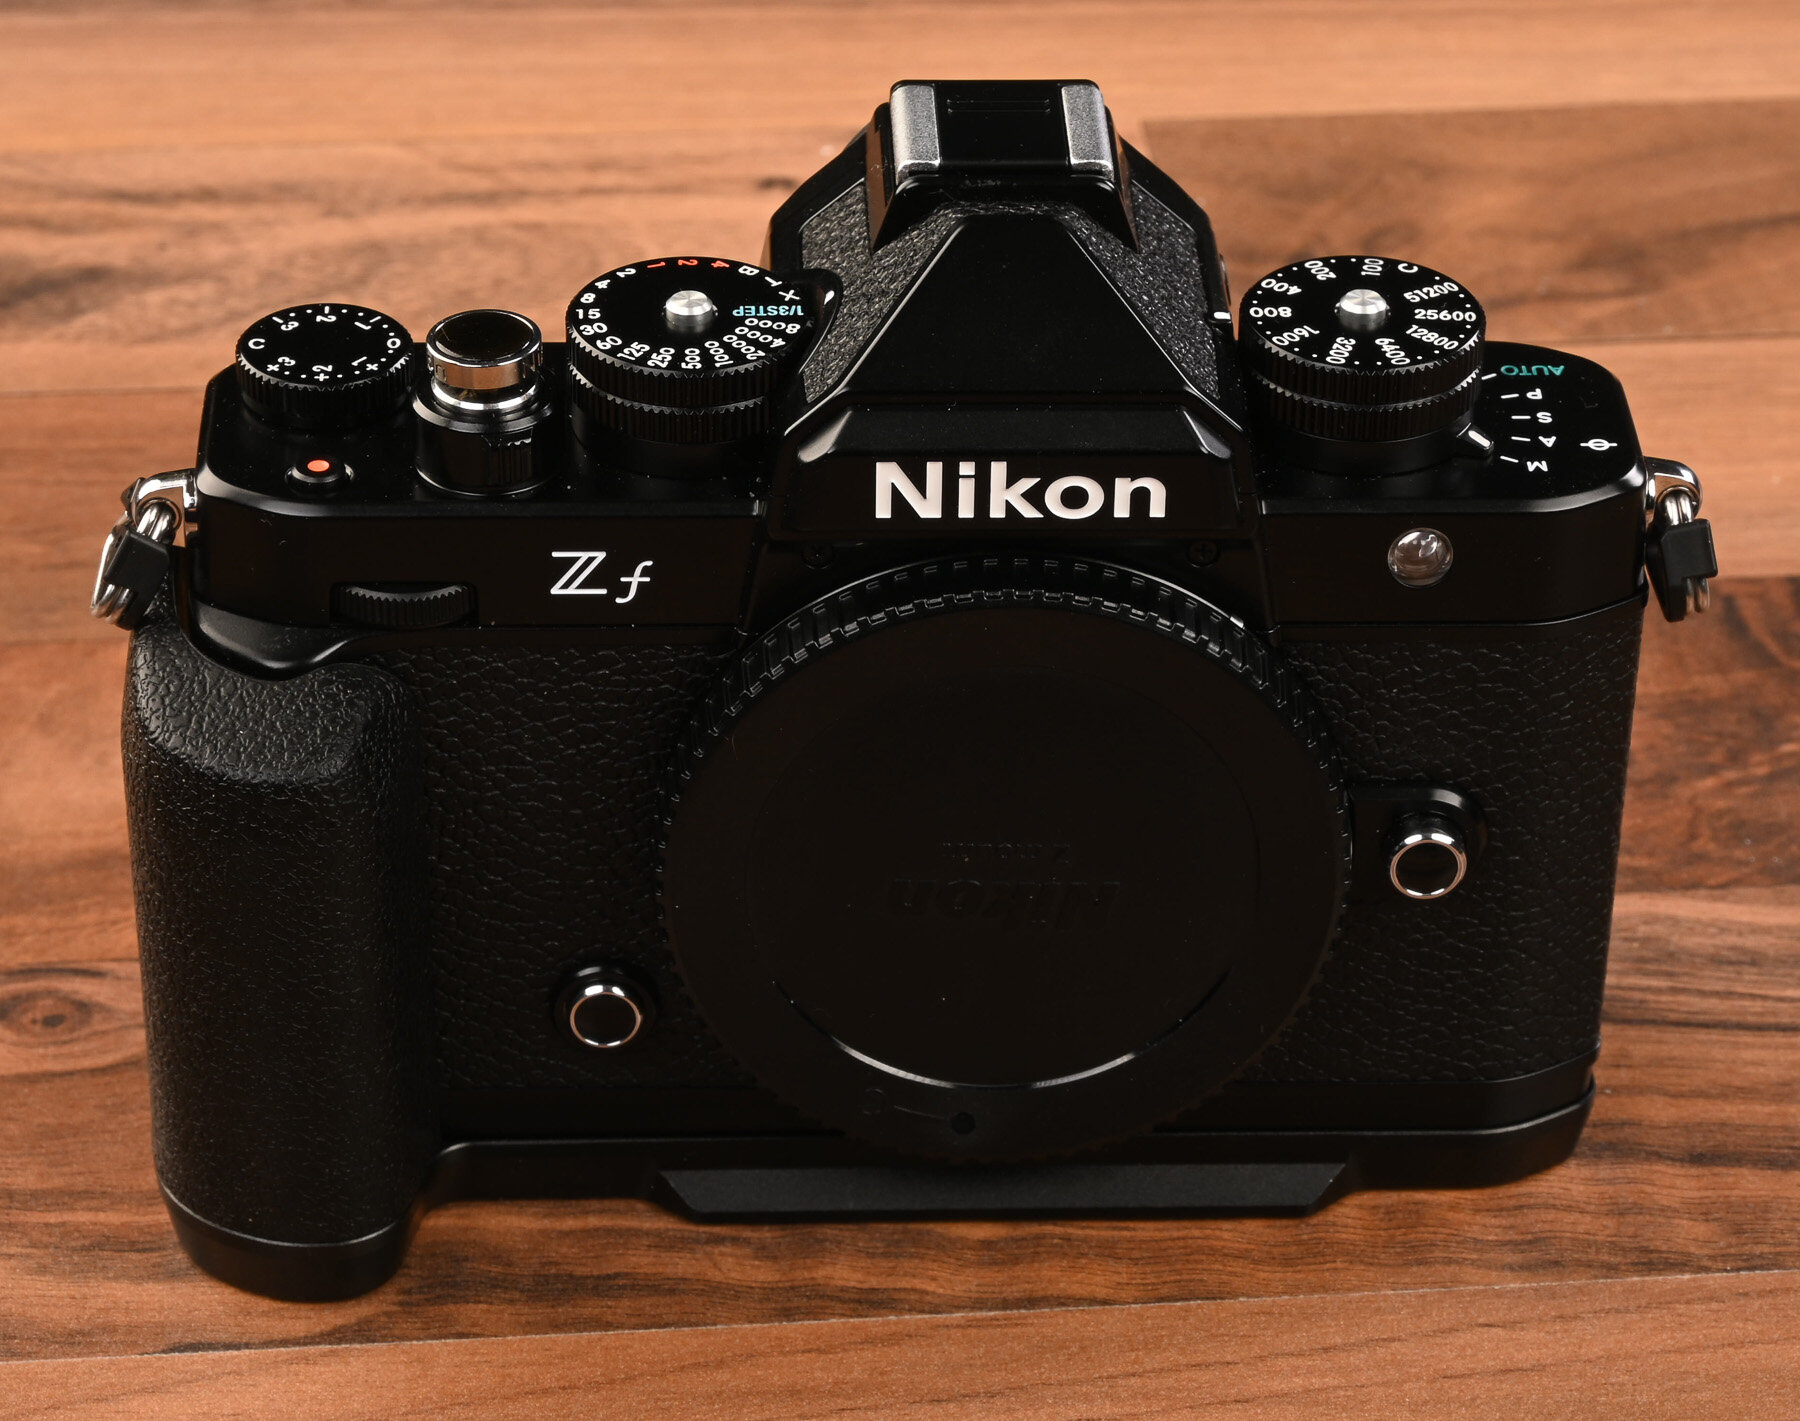 More information about "SmallRig per Nikon Zf"